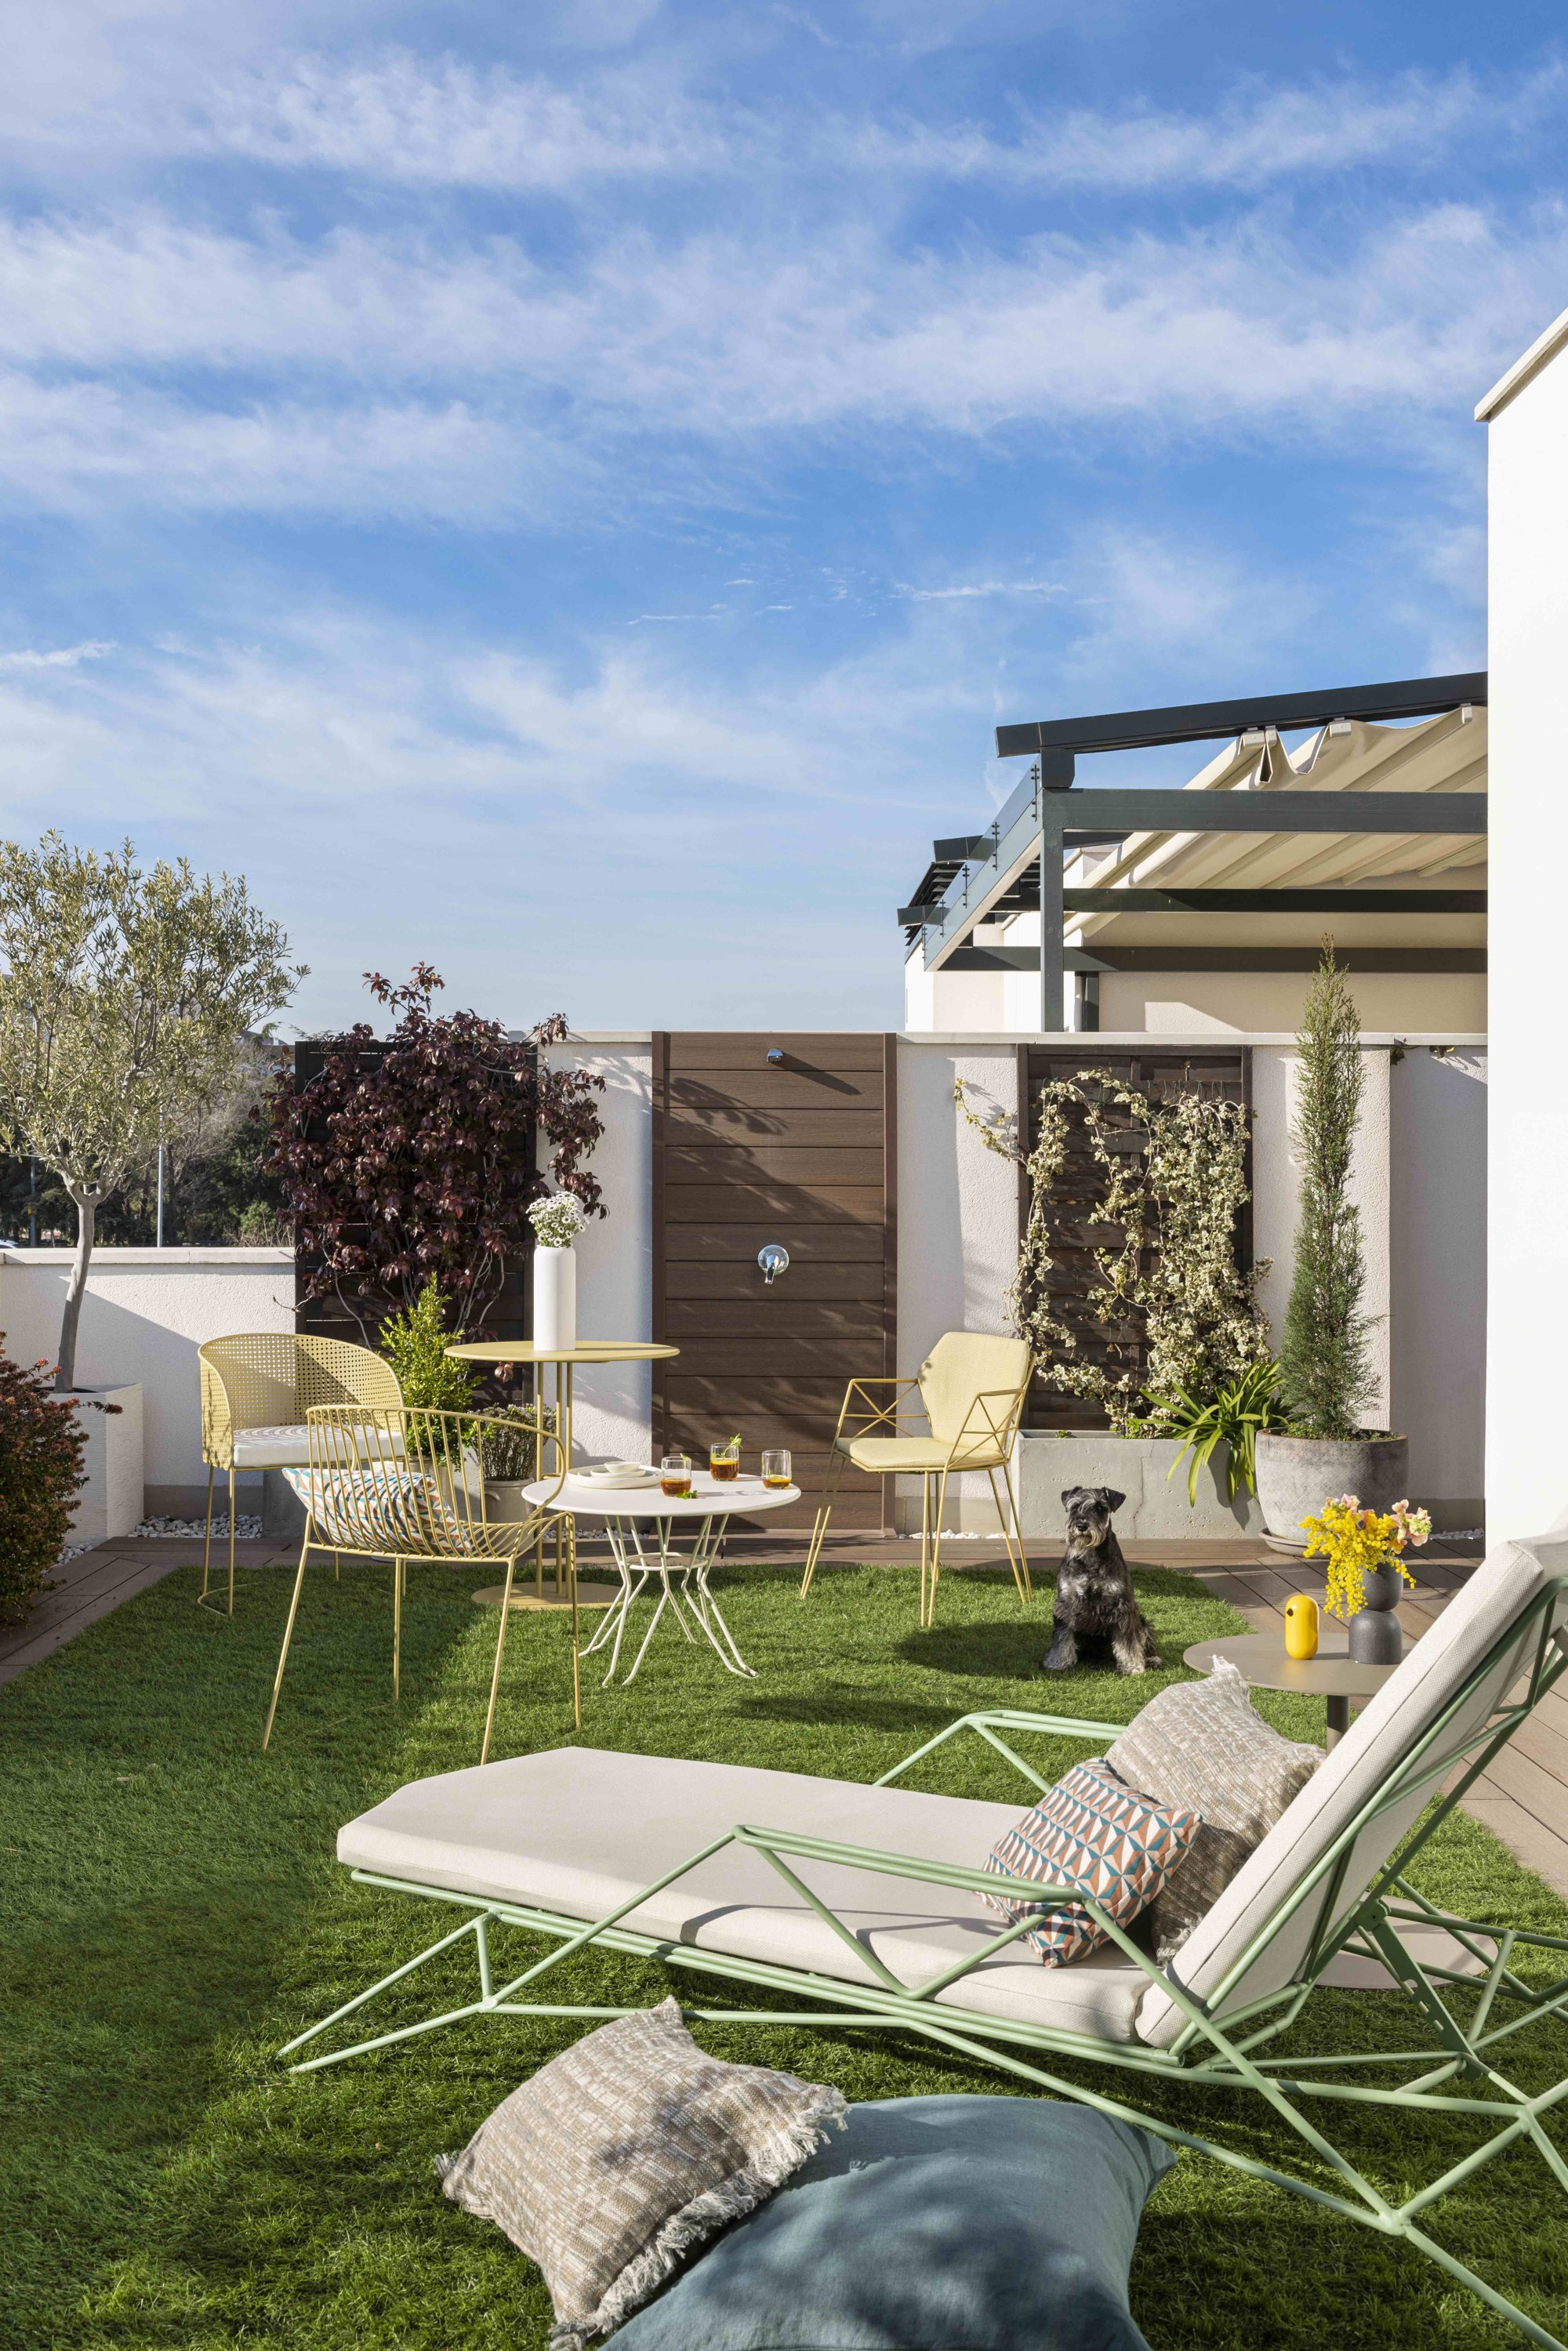 Césped artificial para convertir tu terraza en un jardín